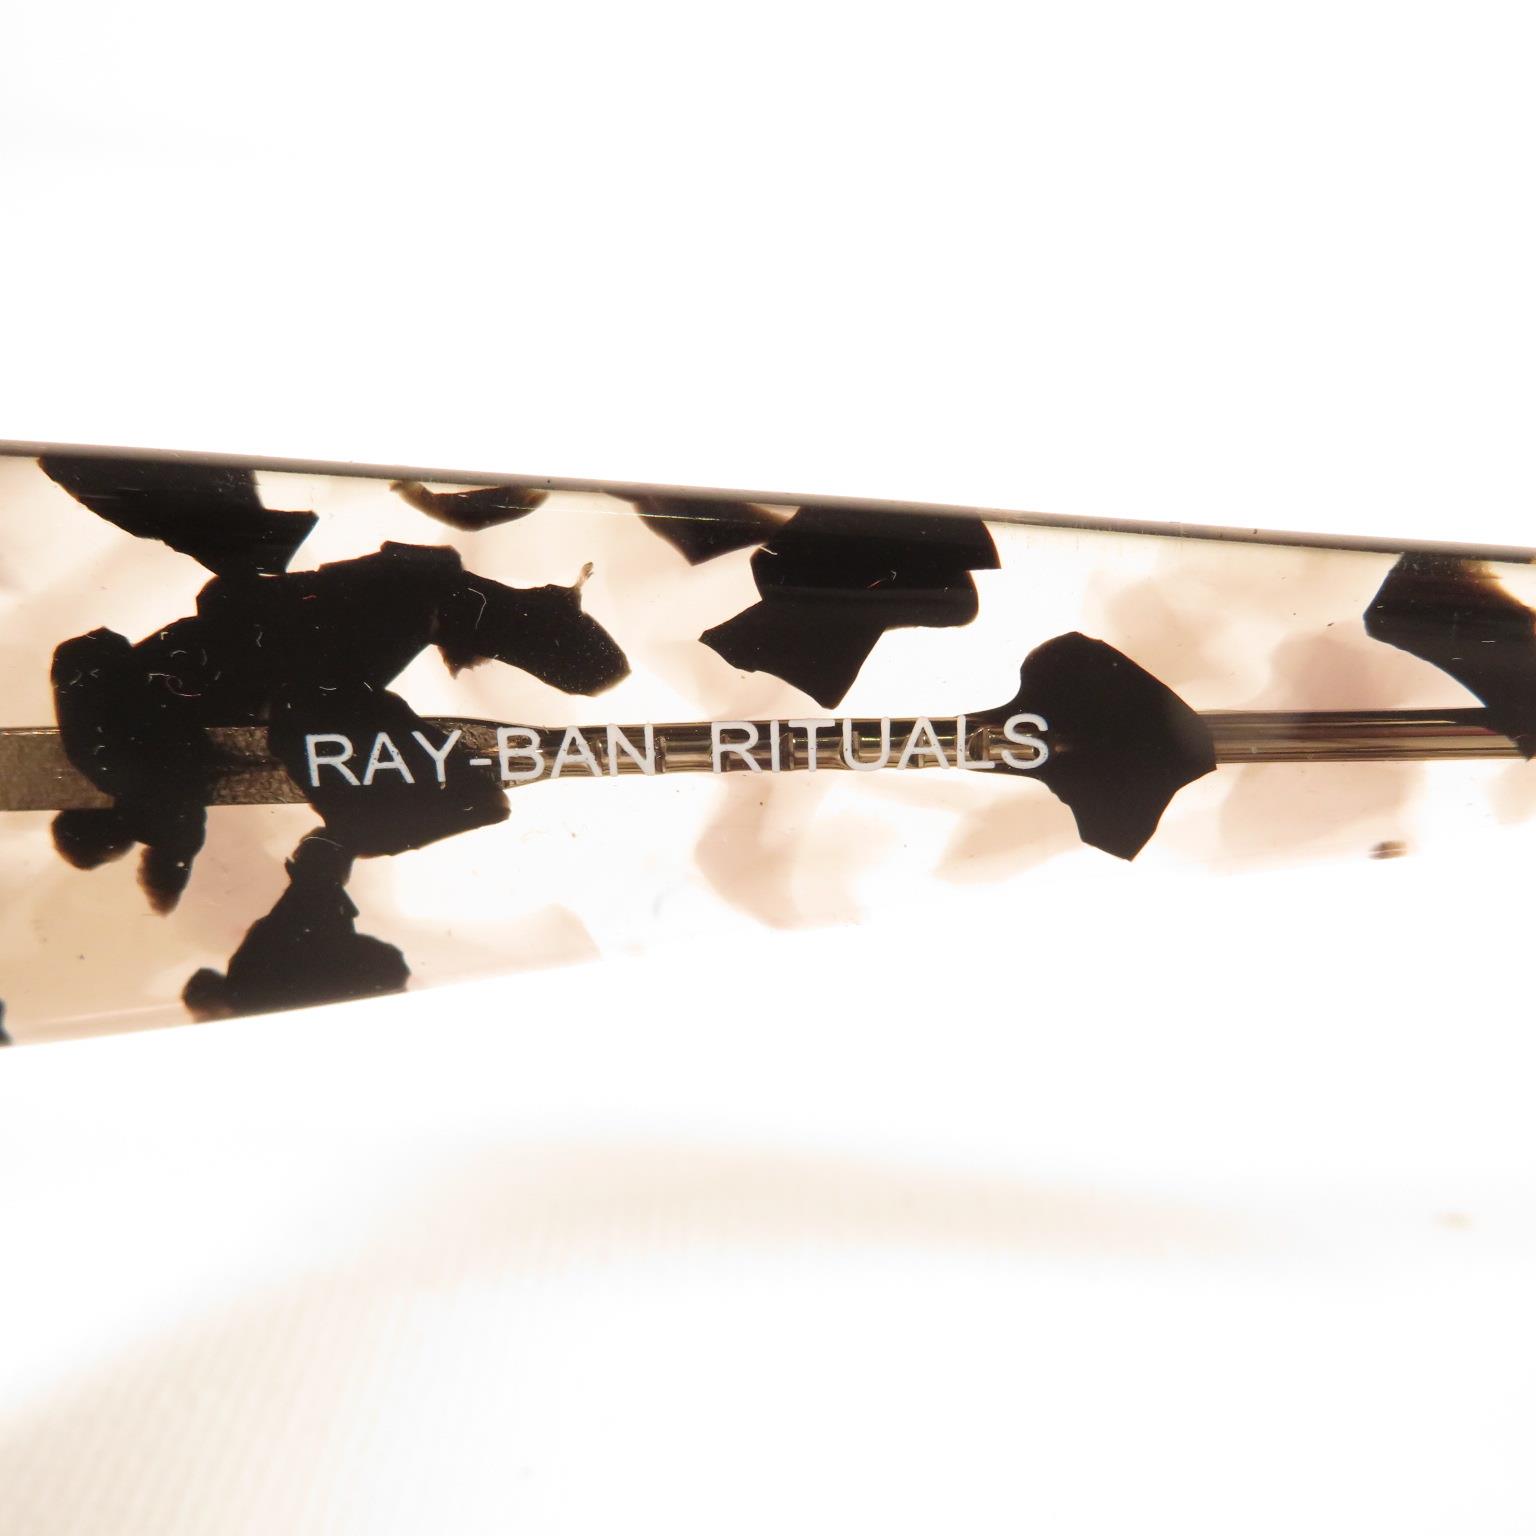 5x sets of Ray Ban sunglasses - - Image 23 of 23